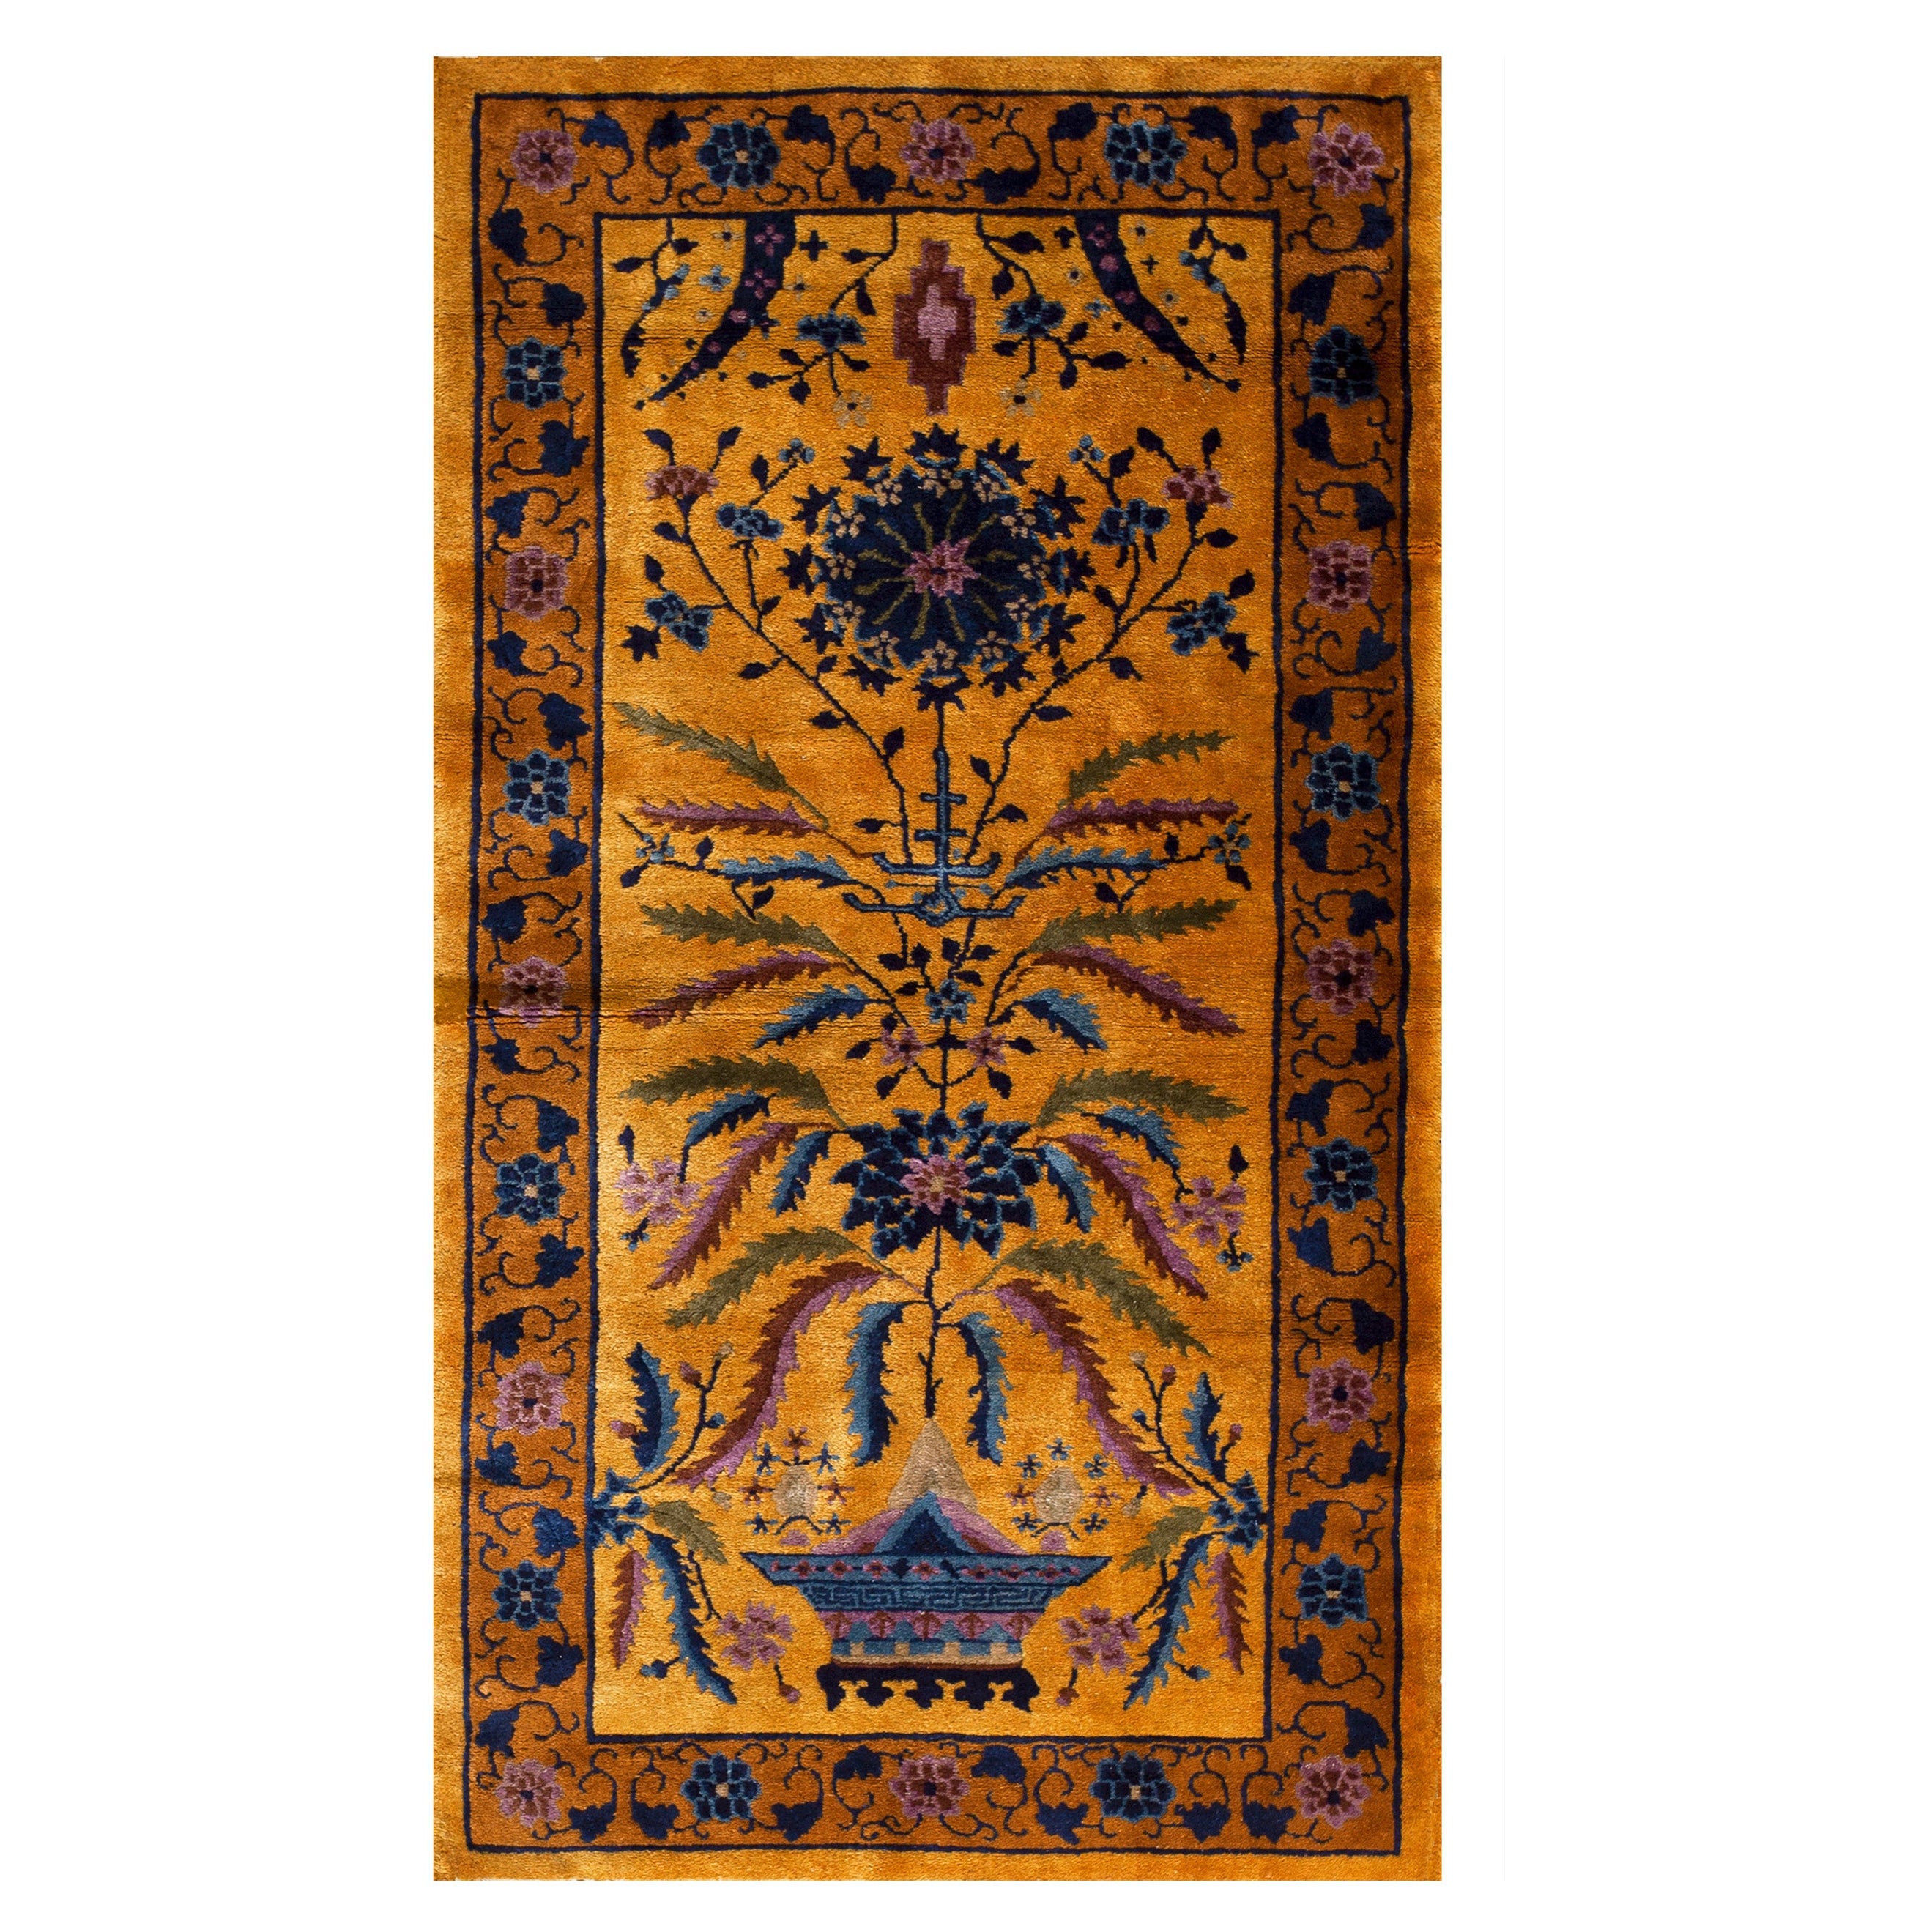 1920s Chinese Art Deco Carpet ( 3'' x 5'6'' - 92 x 167 )